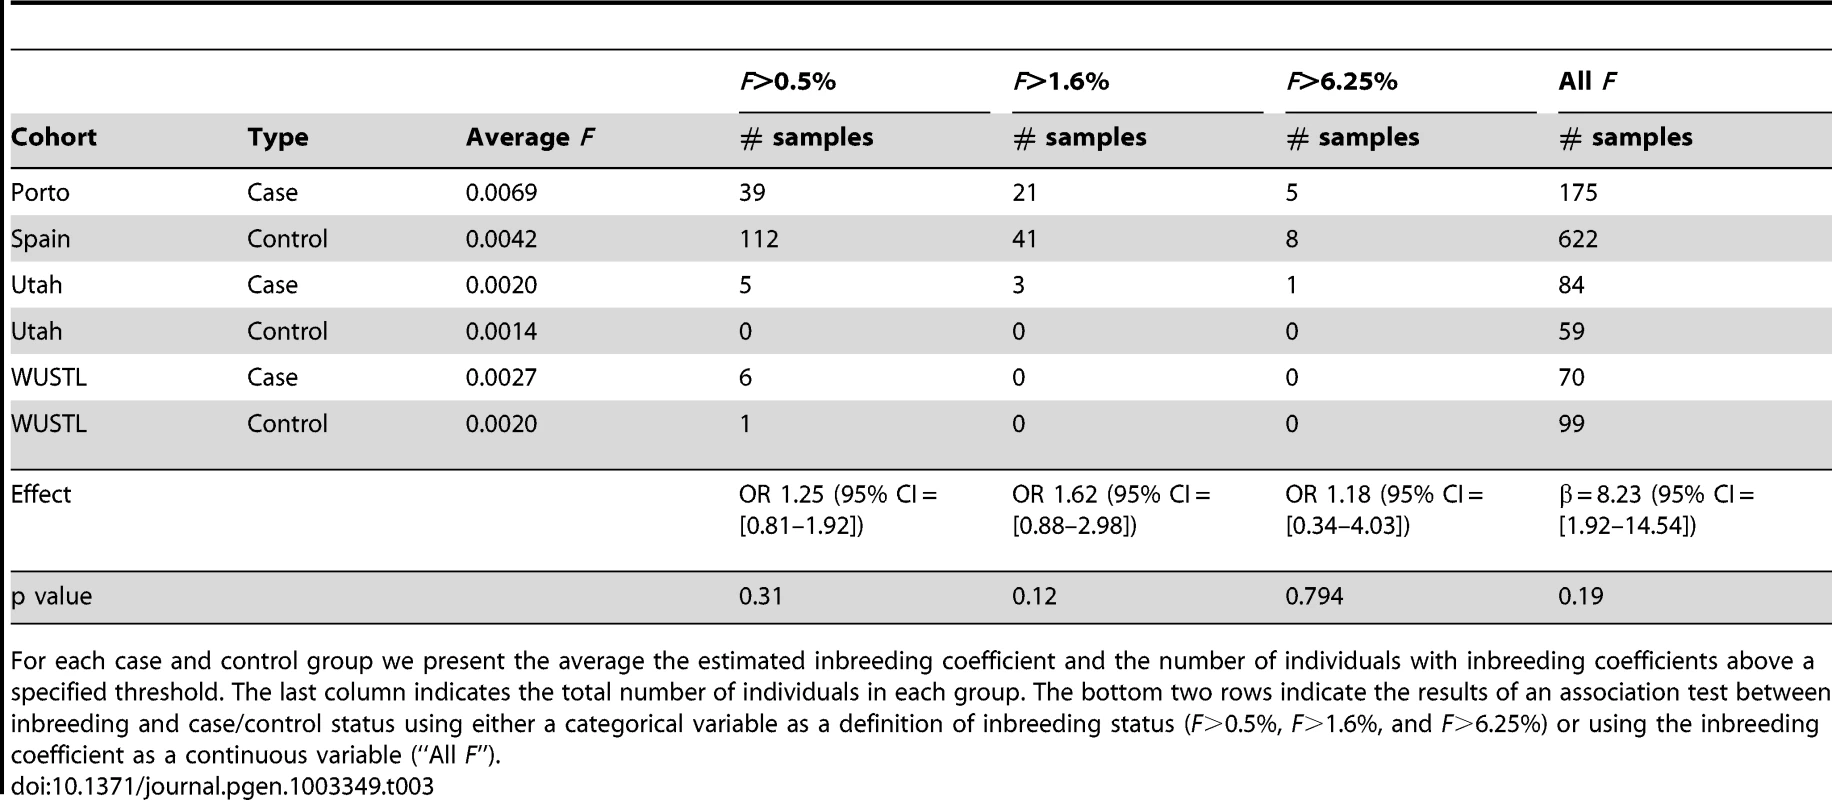 Summary of inbreeding coefficient estimates across cohorts, and association testing.